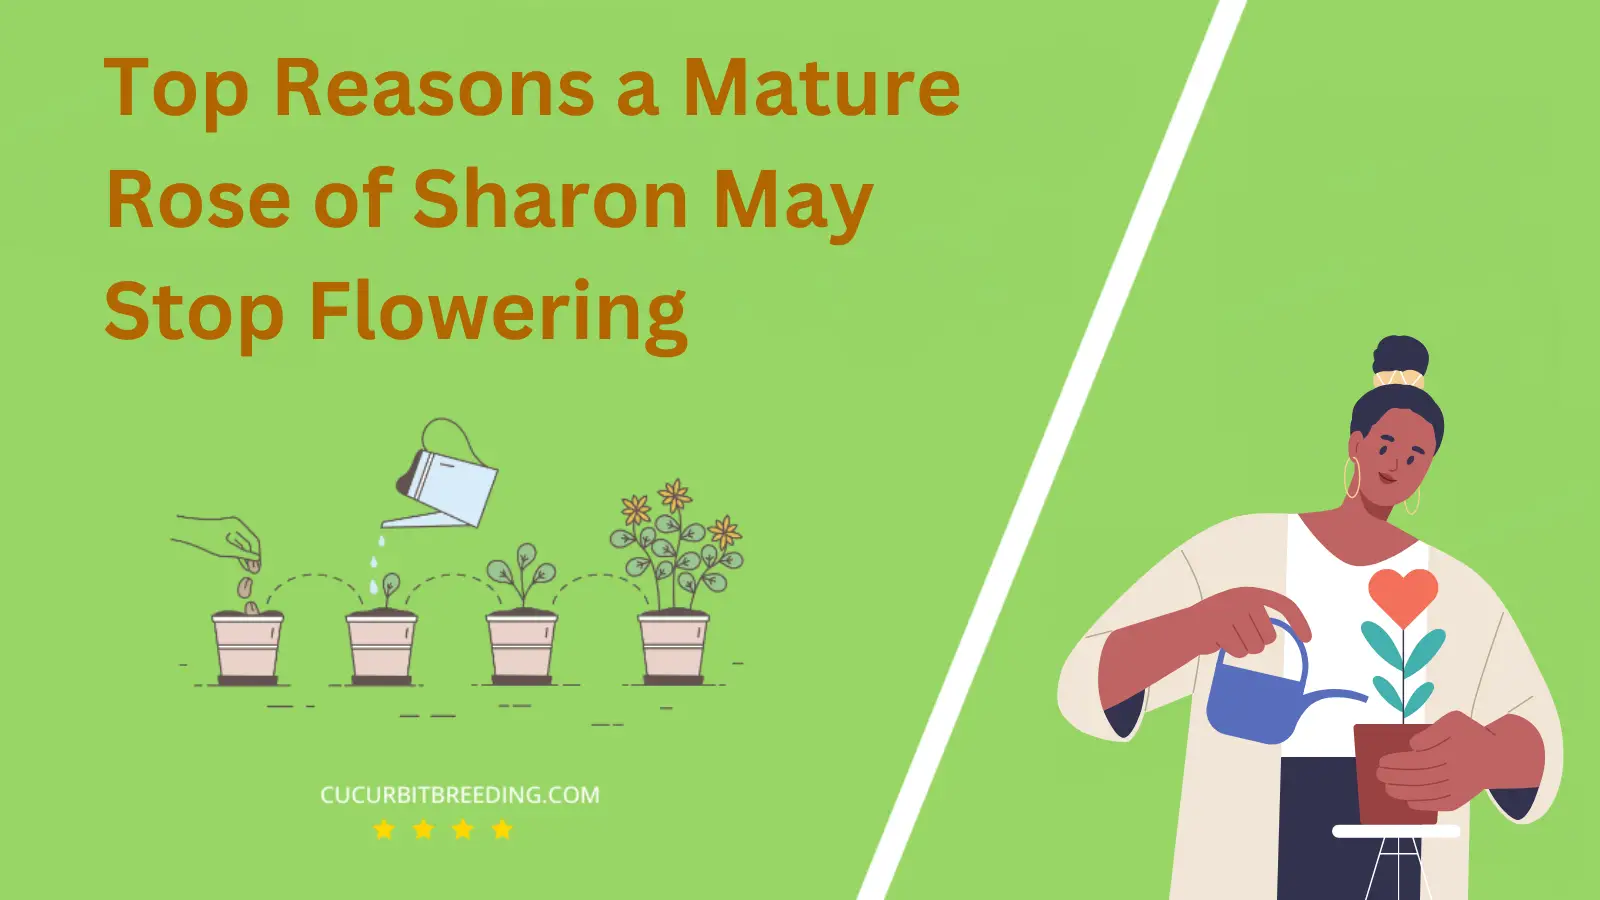 Top Reasons a Mature Rose of Sharon May Stop Flowering